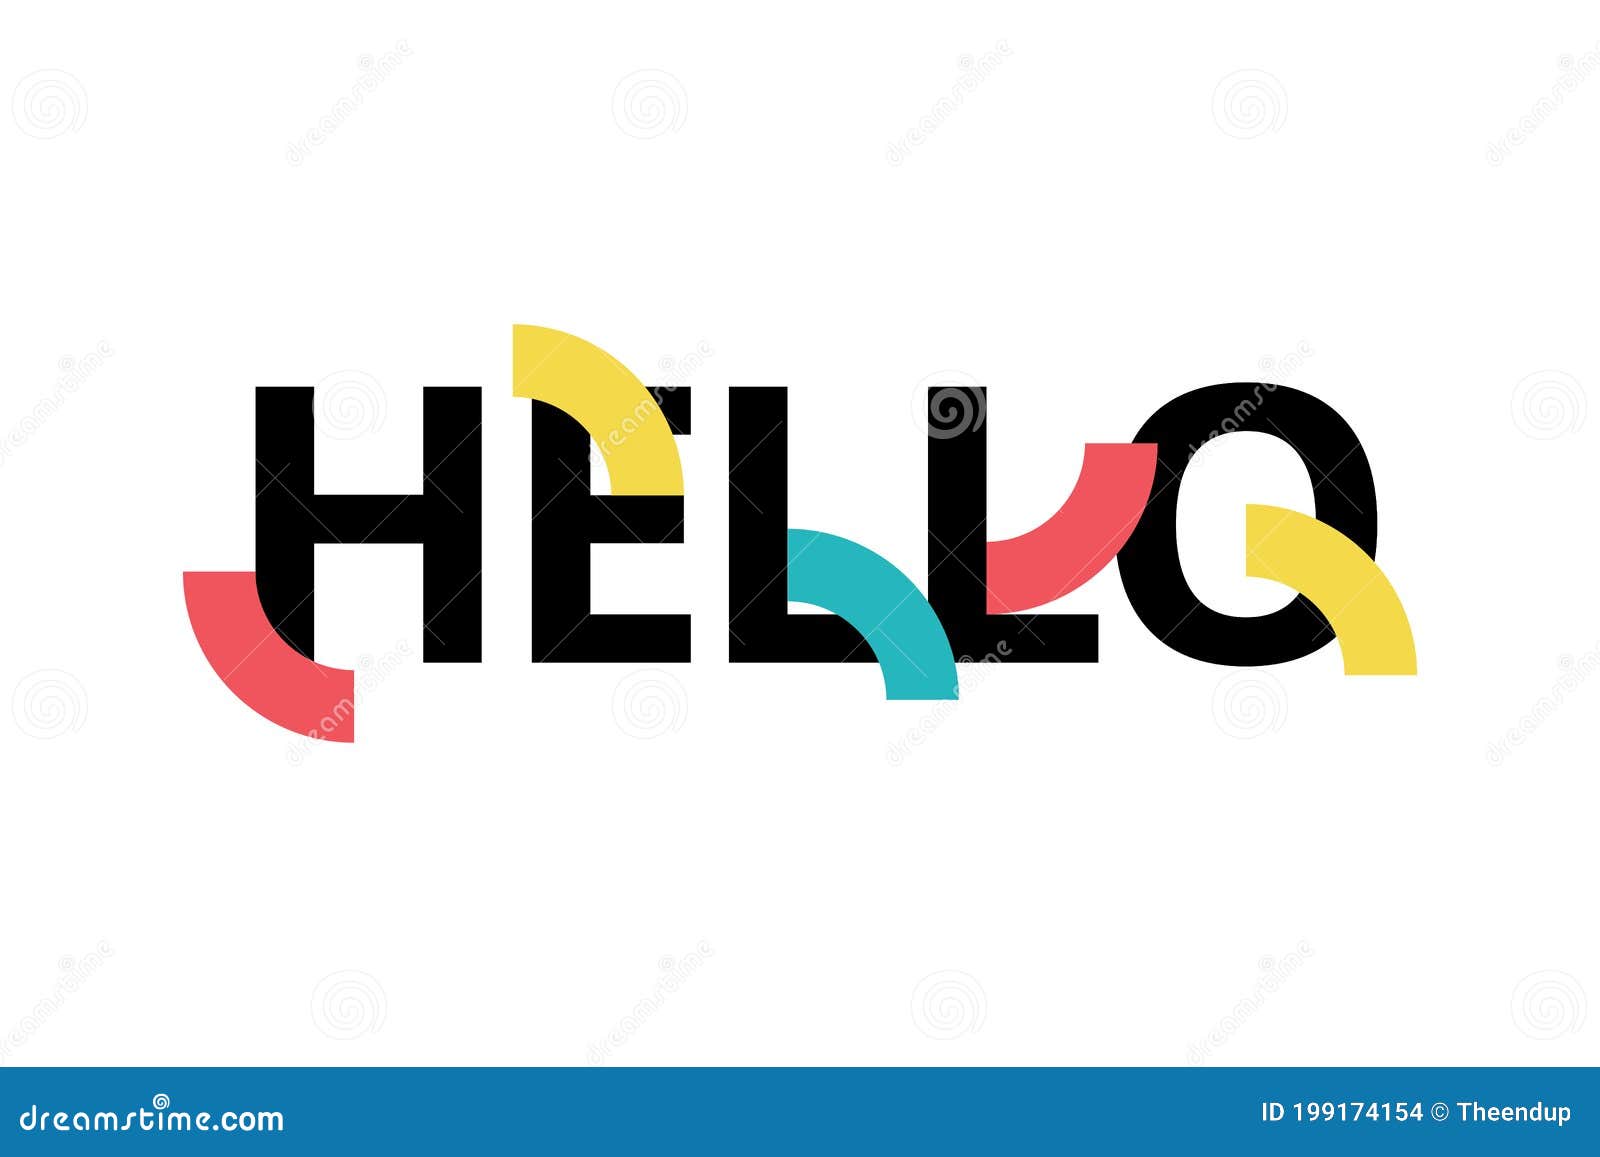 HelloFresh Logo PNG Transparent & SVG Vector - Freebie Supply